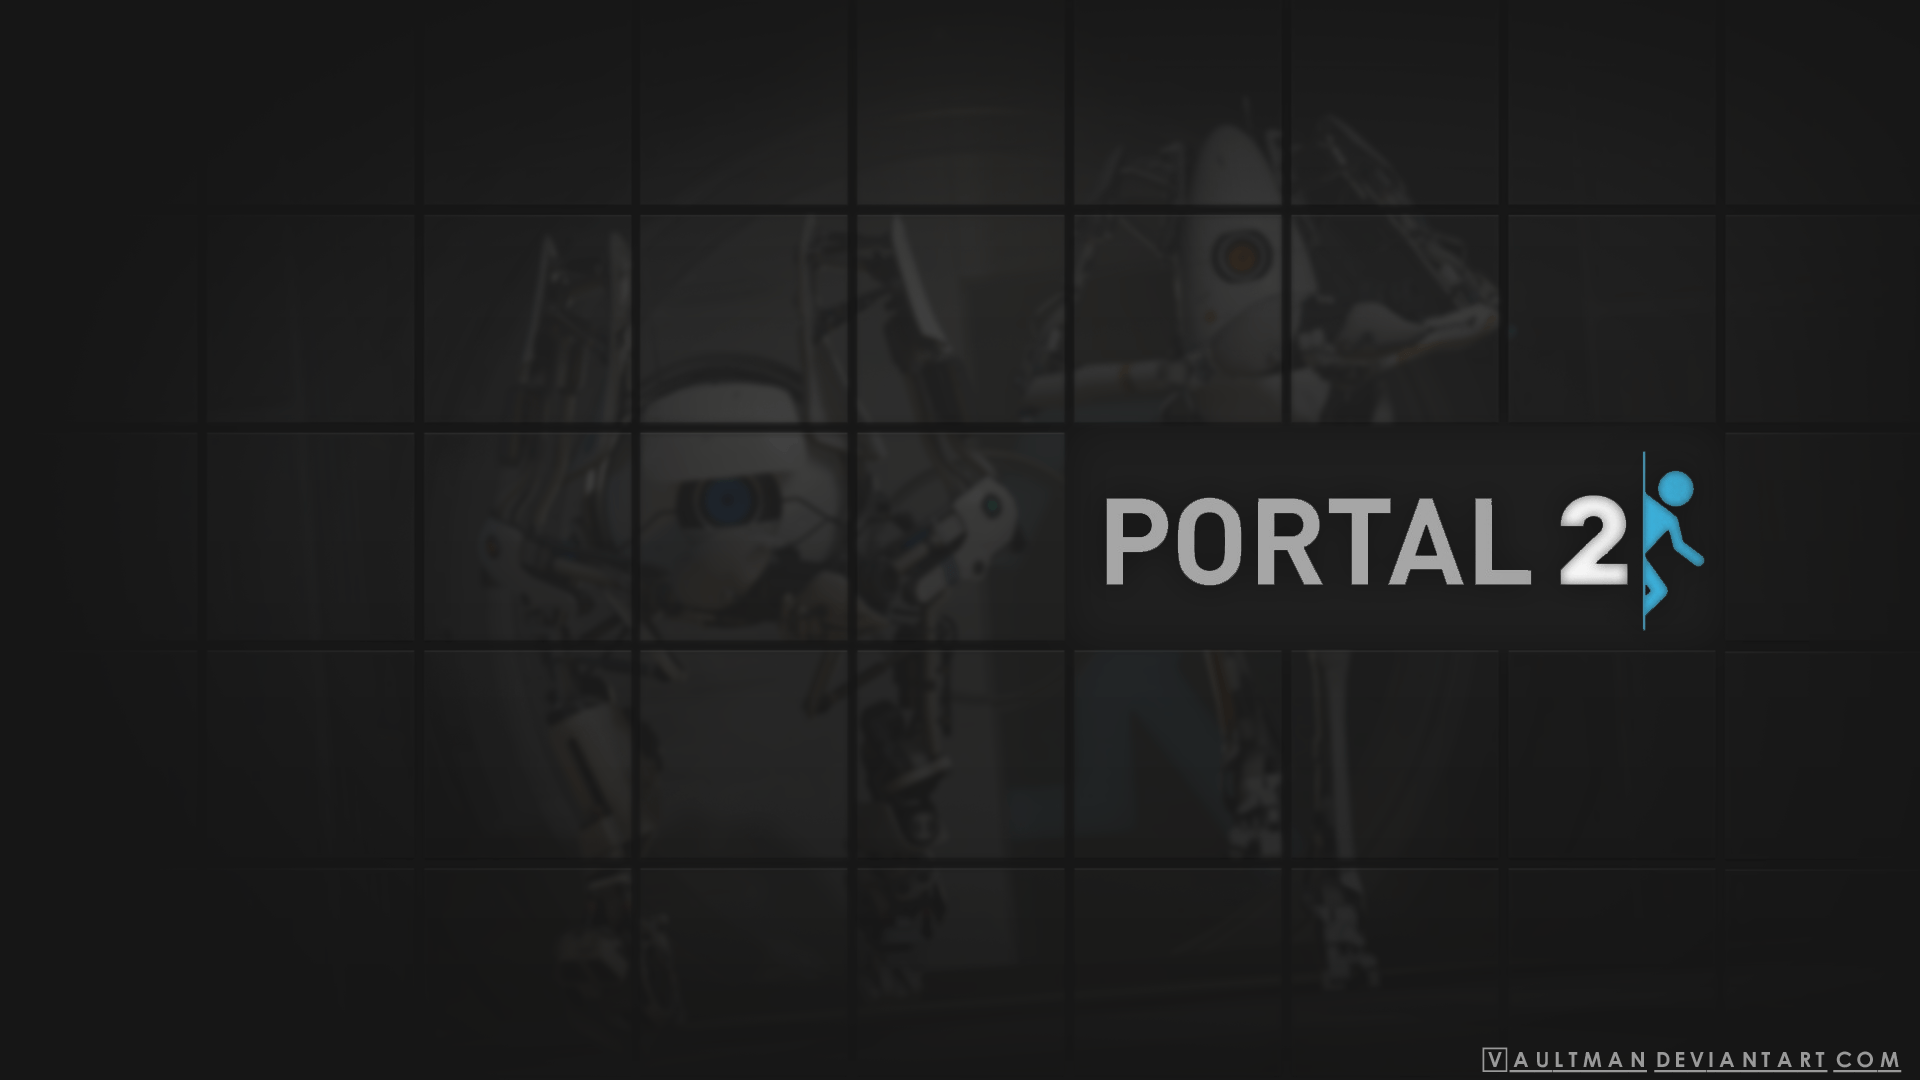 Portal Full HD 1920x1080 Wallpapers Free Downlo HD Game